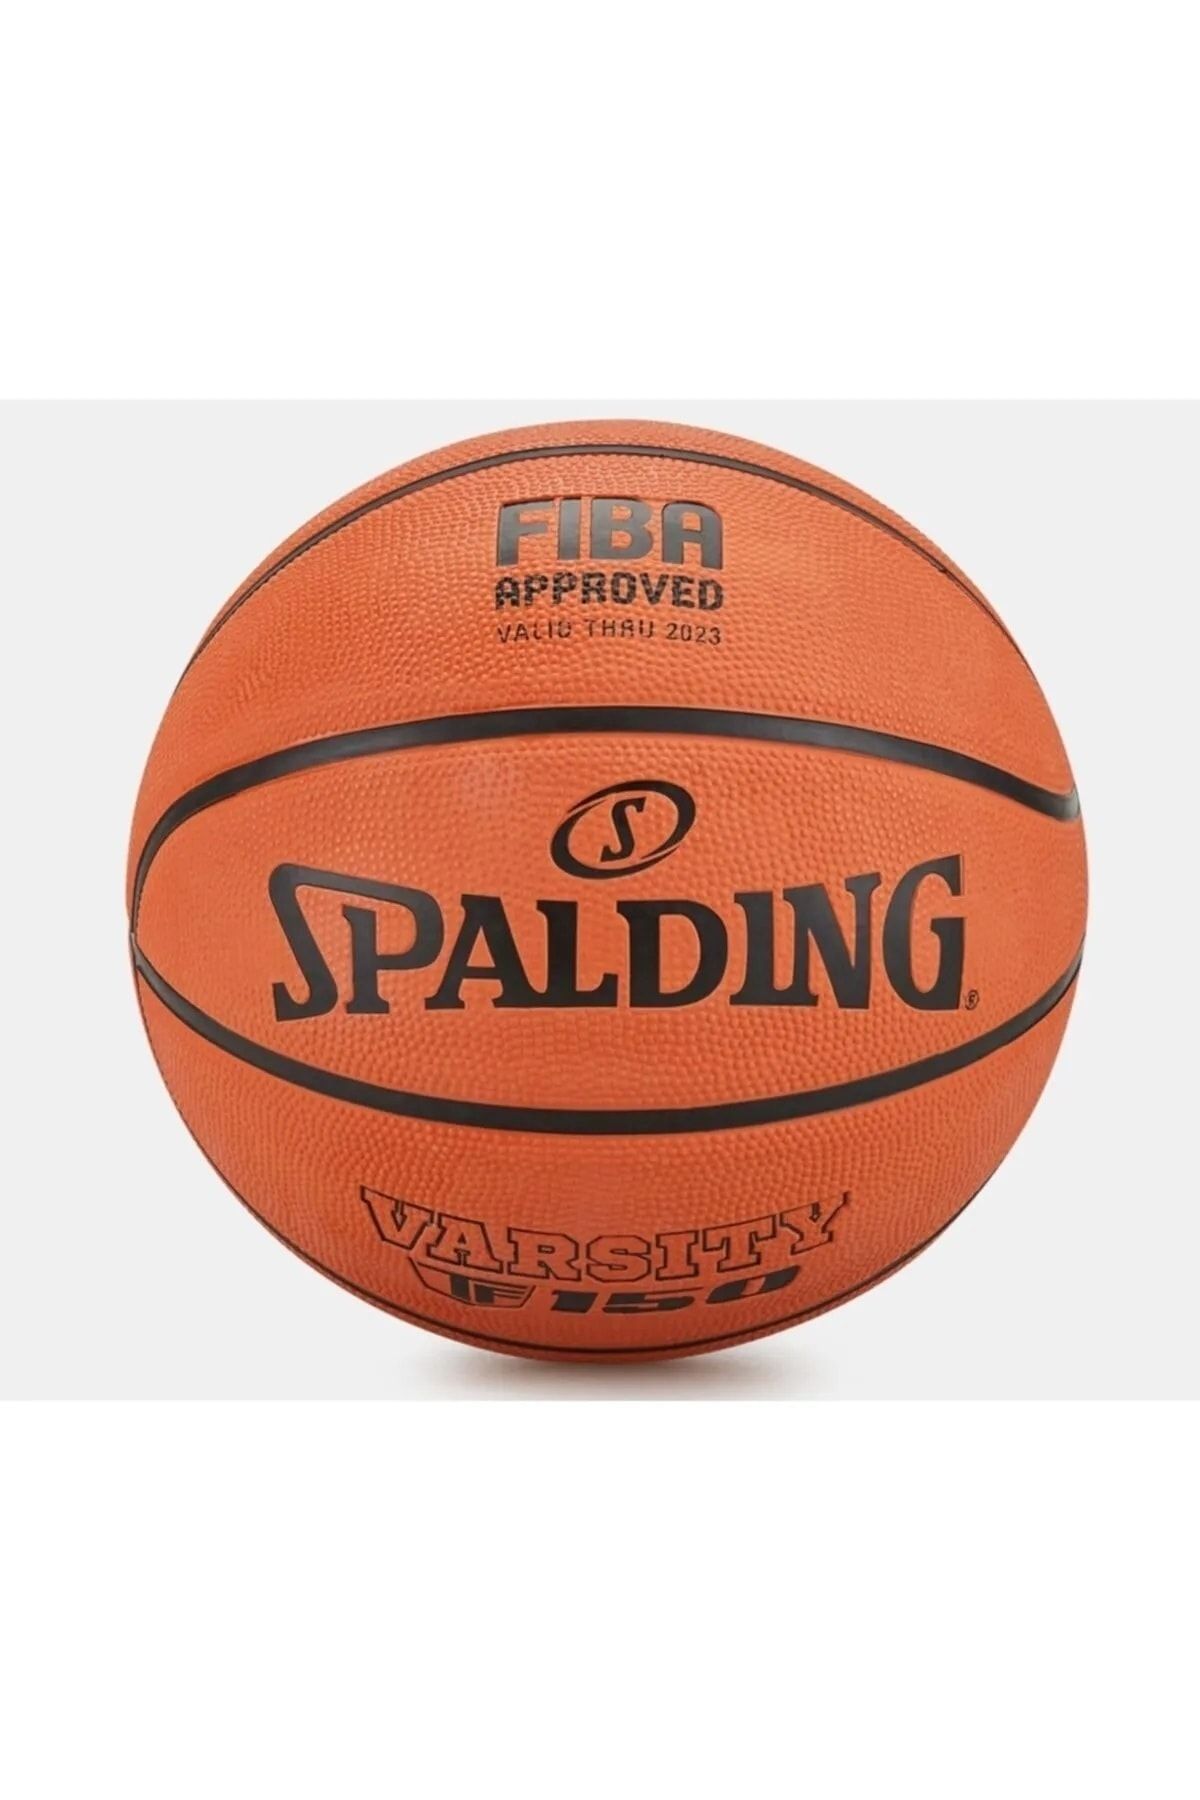 Spalding Basketbol Topu Tf-150 5 No